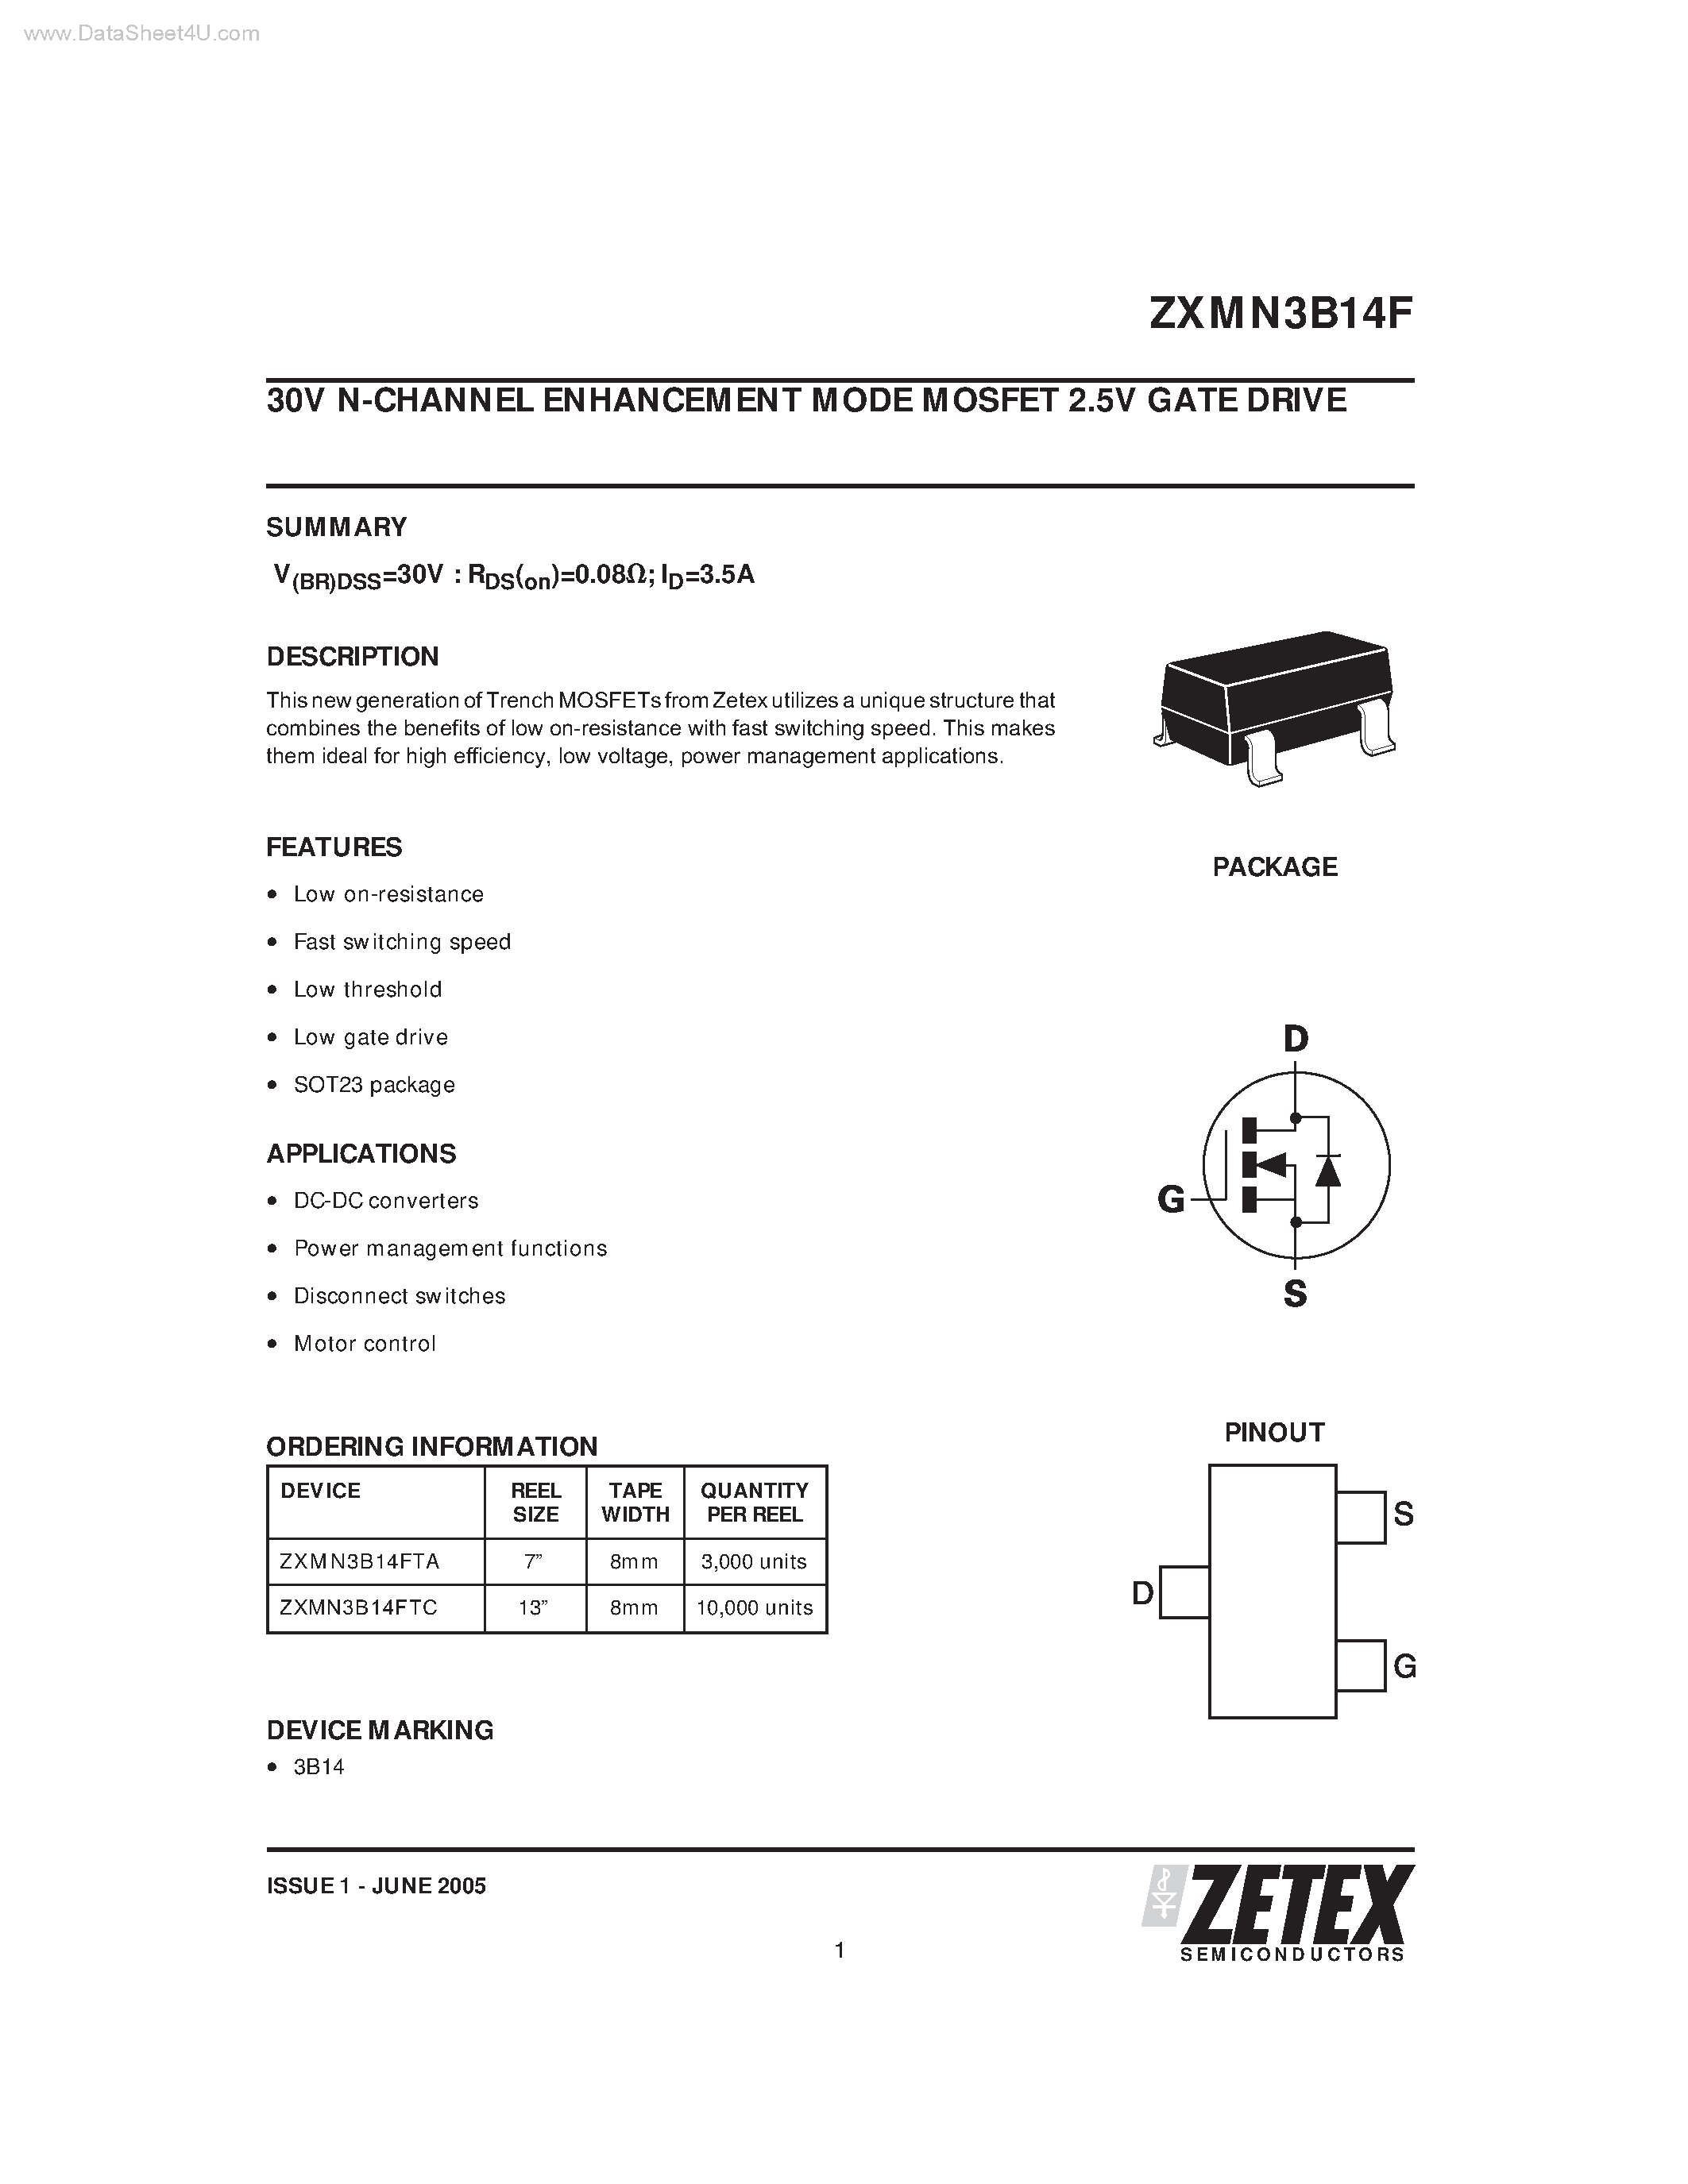 Даташит ZXMN3B14F - N-CHANNEL ENHANCEMENT MODE MOSFET 2.5V GATE DRIVE страница 1